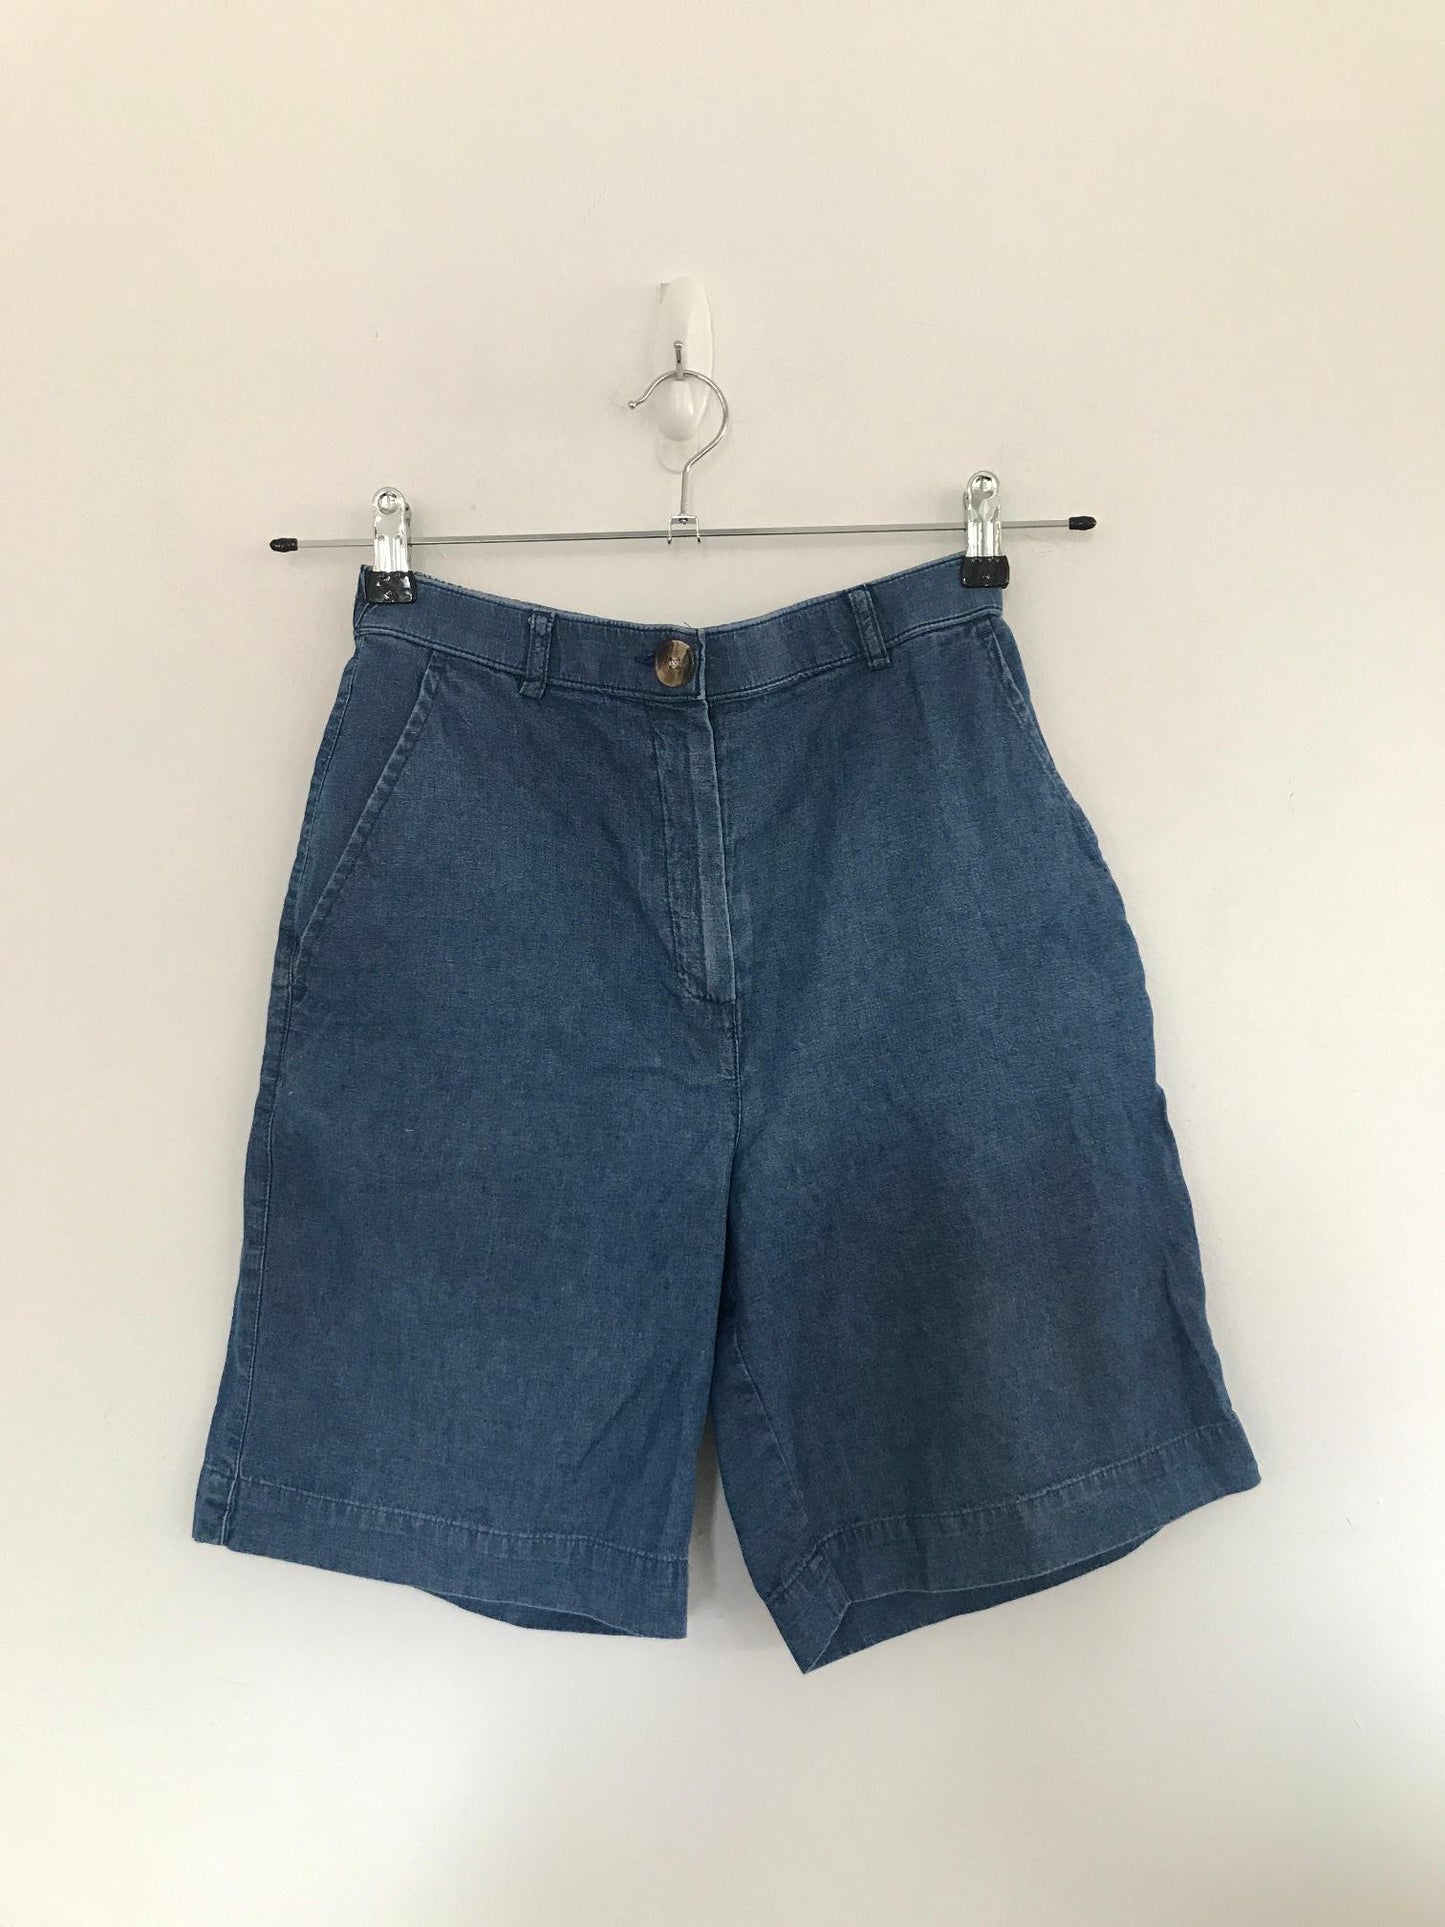 Dark Wash Long Shorts, St Michael, Size 6, 8